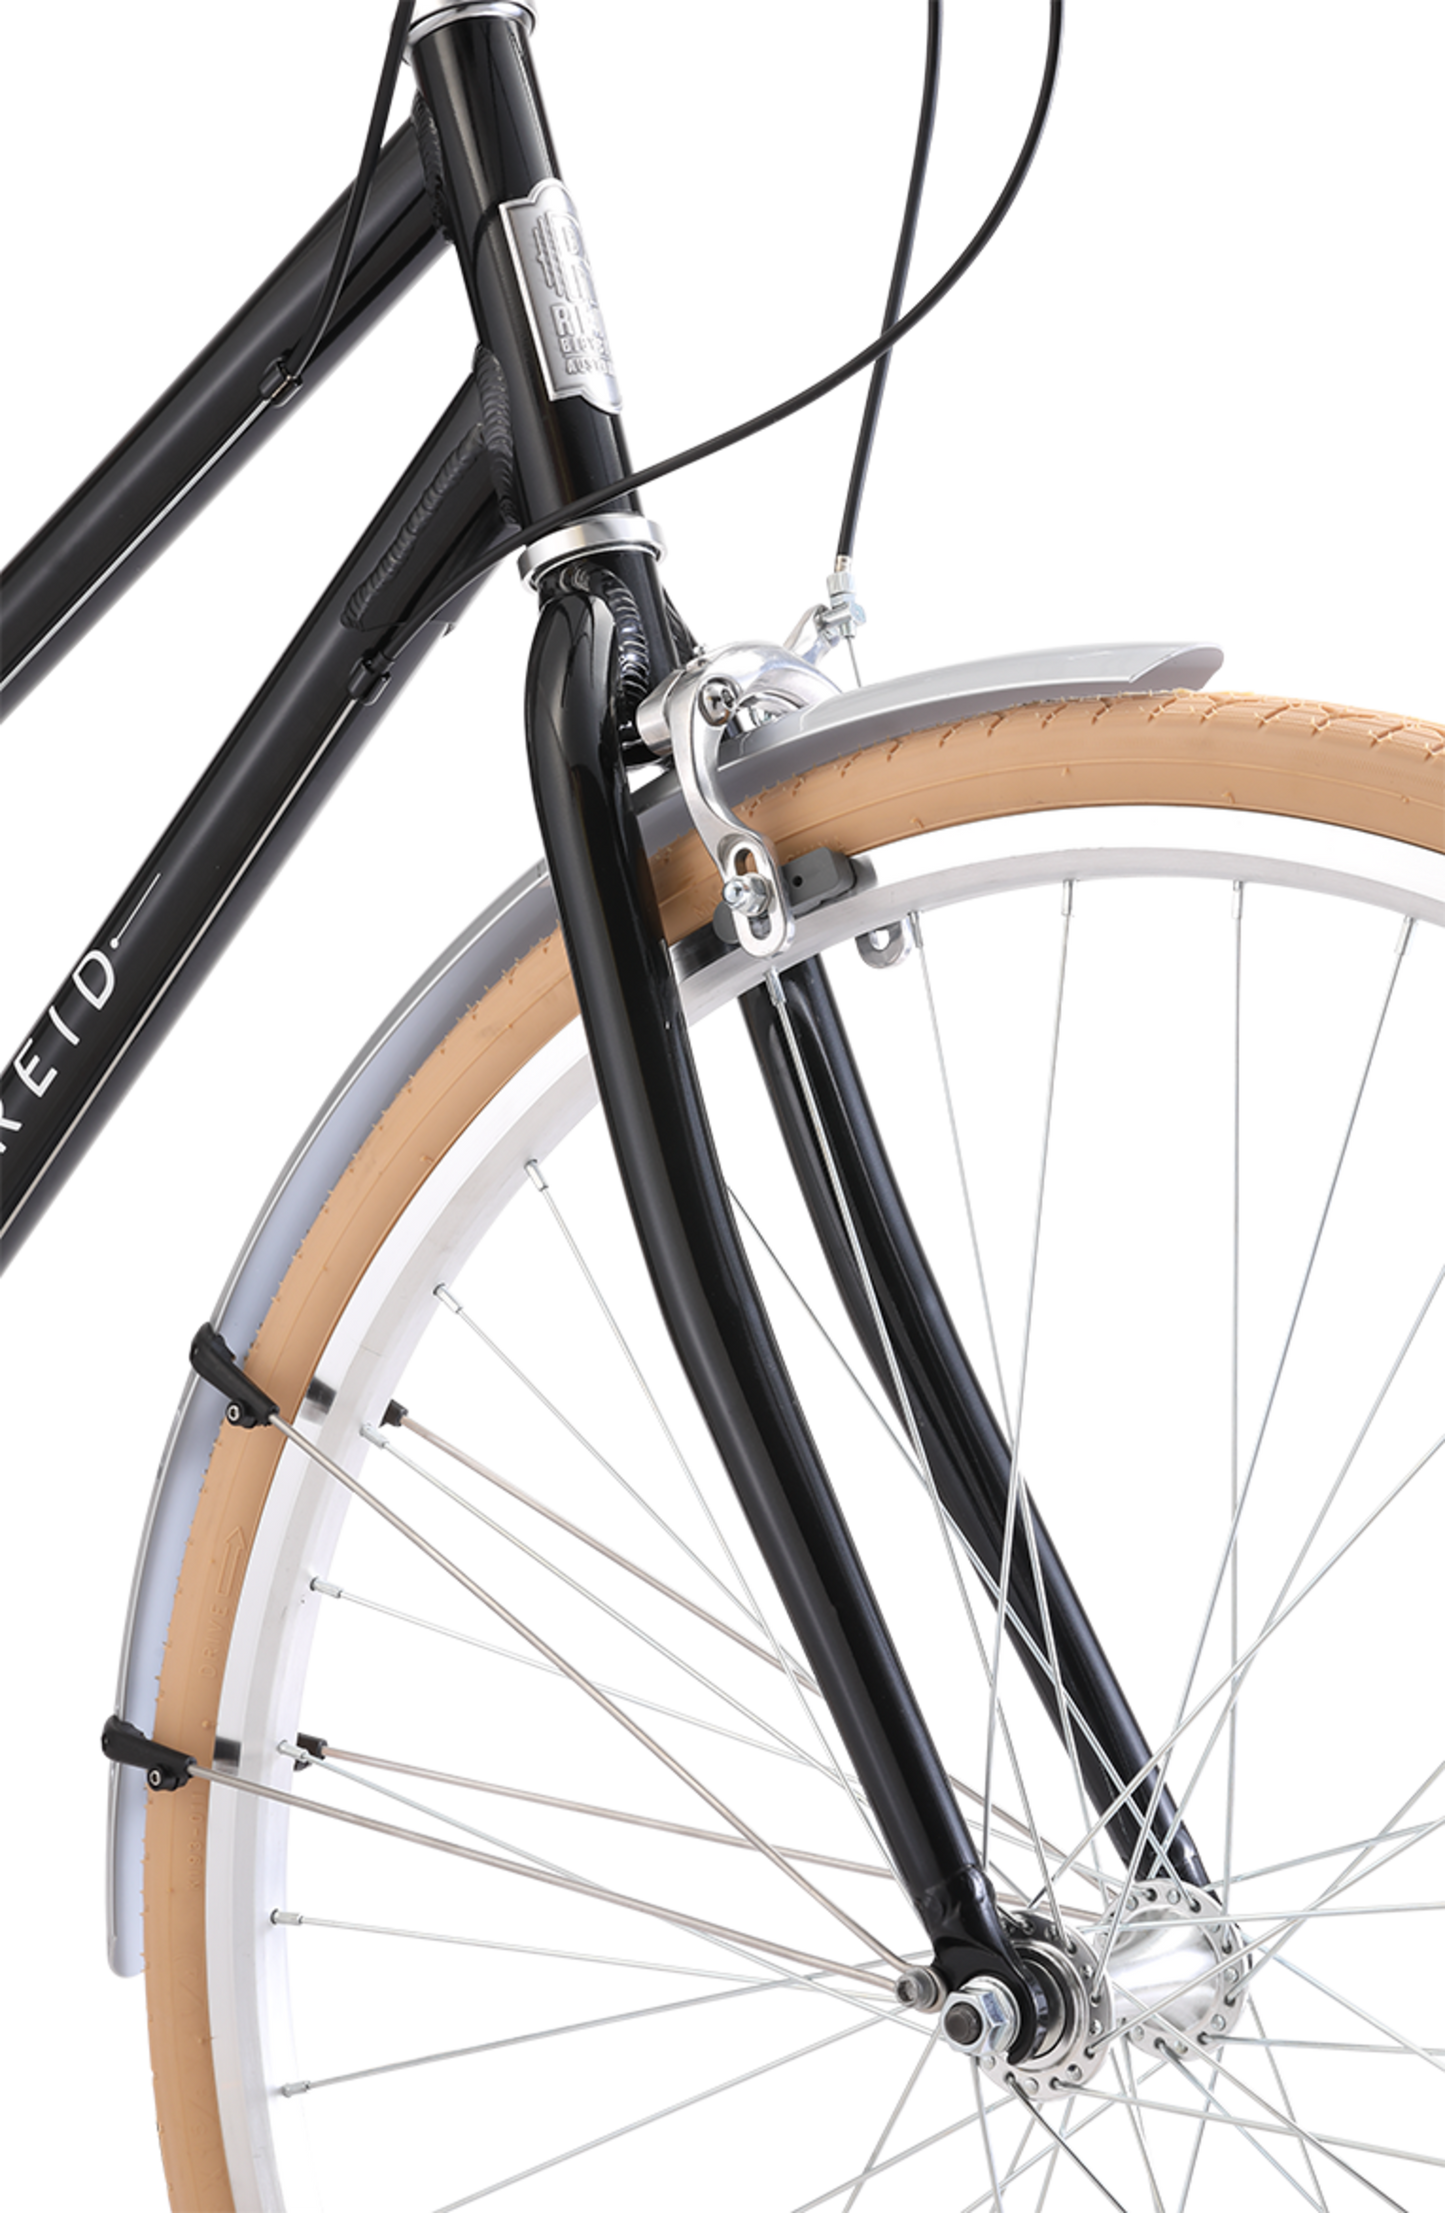 Ladies Esprit Superlite Vintage Bike in Metallic Black showing front Dual-Pivot Caliper Brakes from Reid Cycles